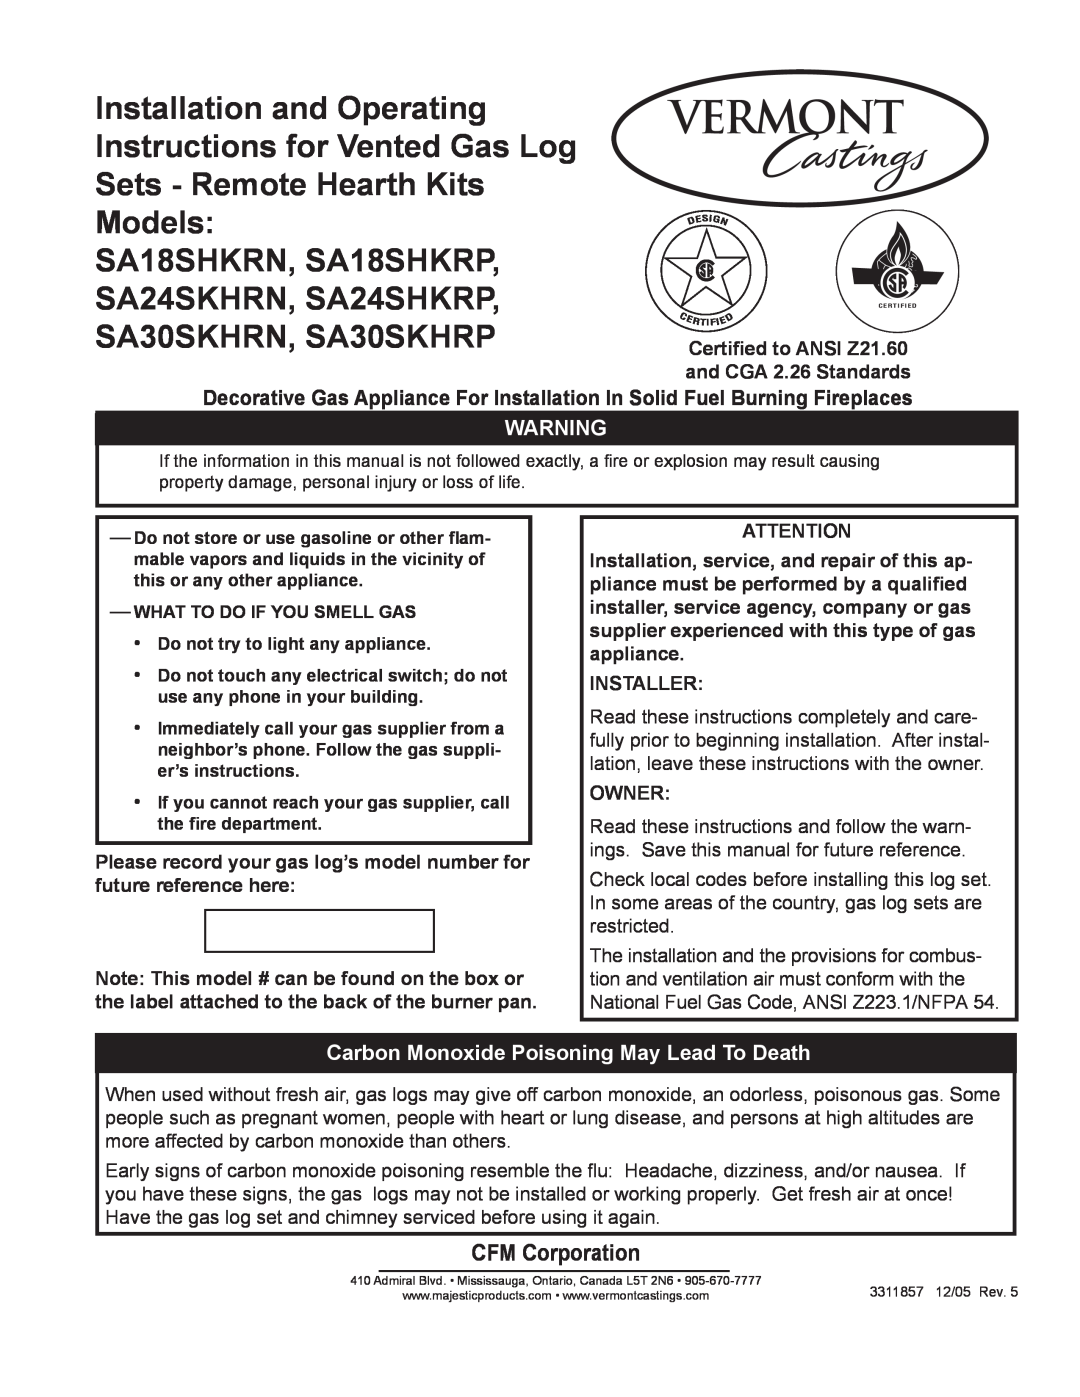 Vermont Casting SA24SHKRP, SA24SKHRN, SA18SHKRP manual CFM Corporation, Carbon Monoxide Poisoning May Lead To Death 